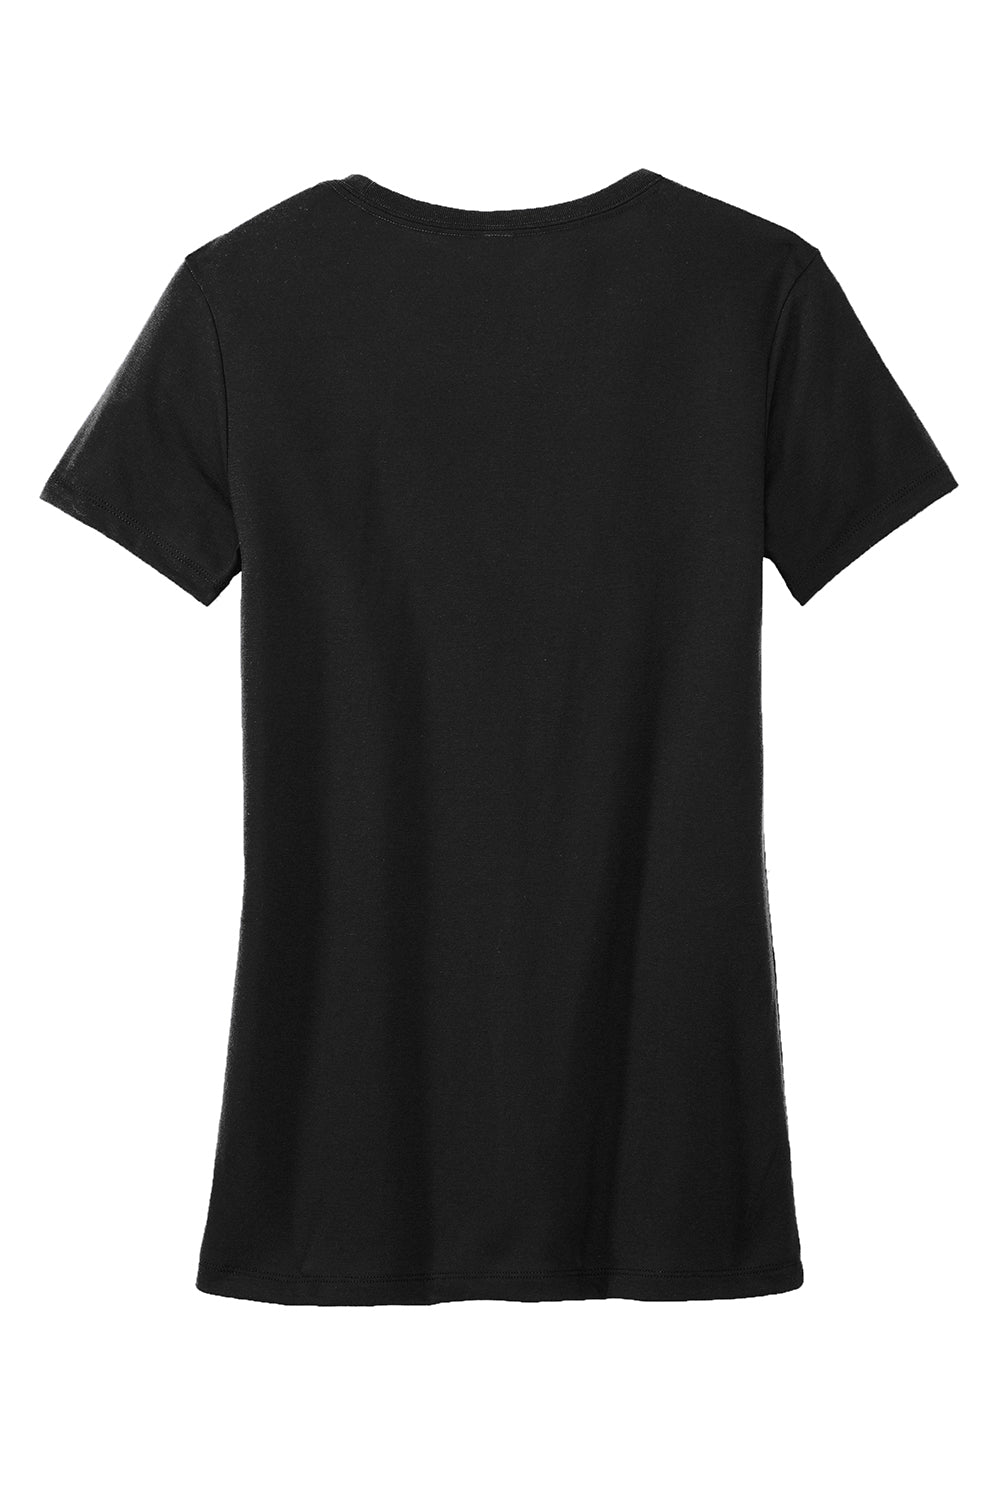 Allmade AL2008 Mens Short Sleeve Crewneck T-Shirt Deep Black Flat Back